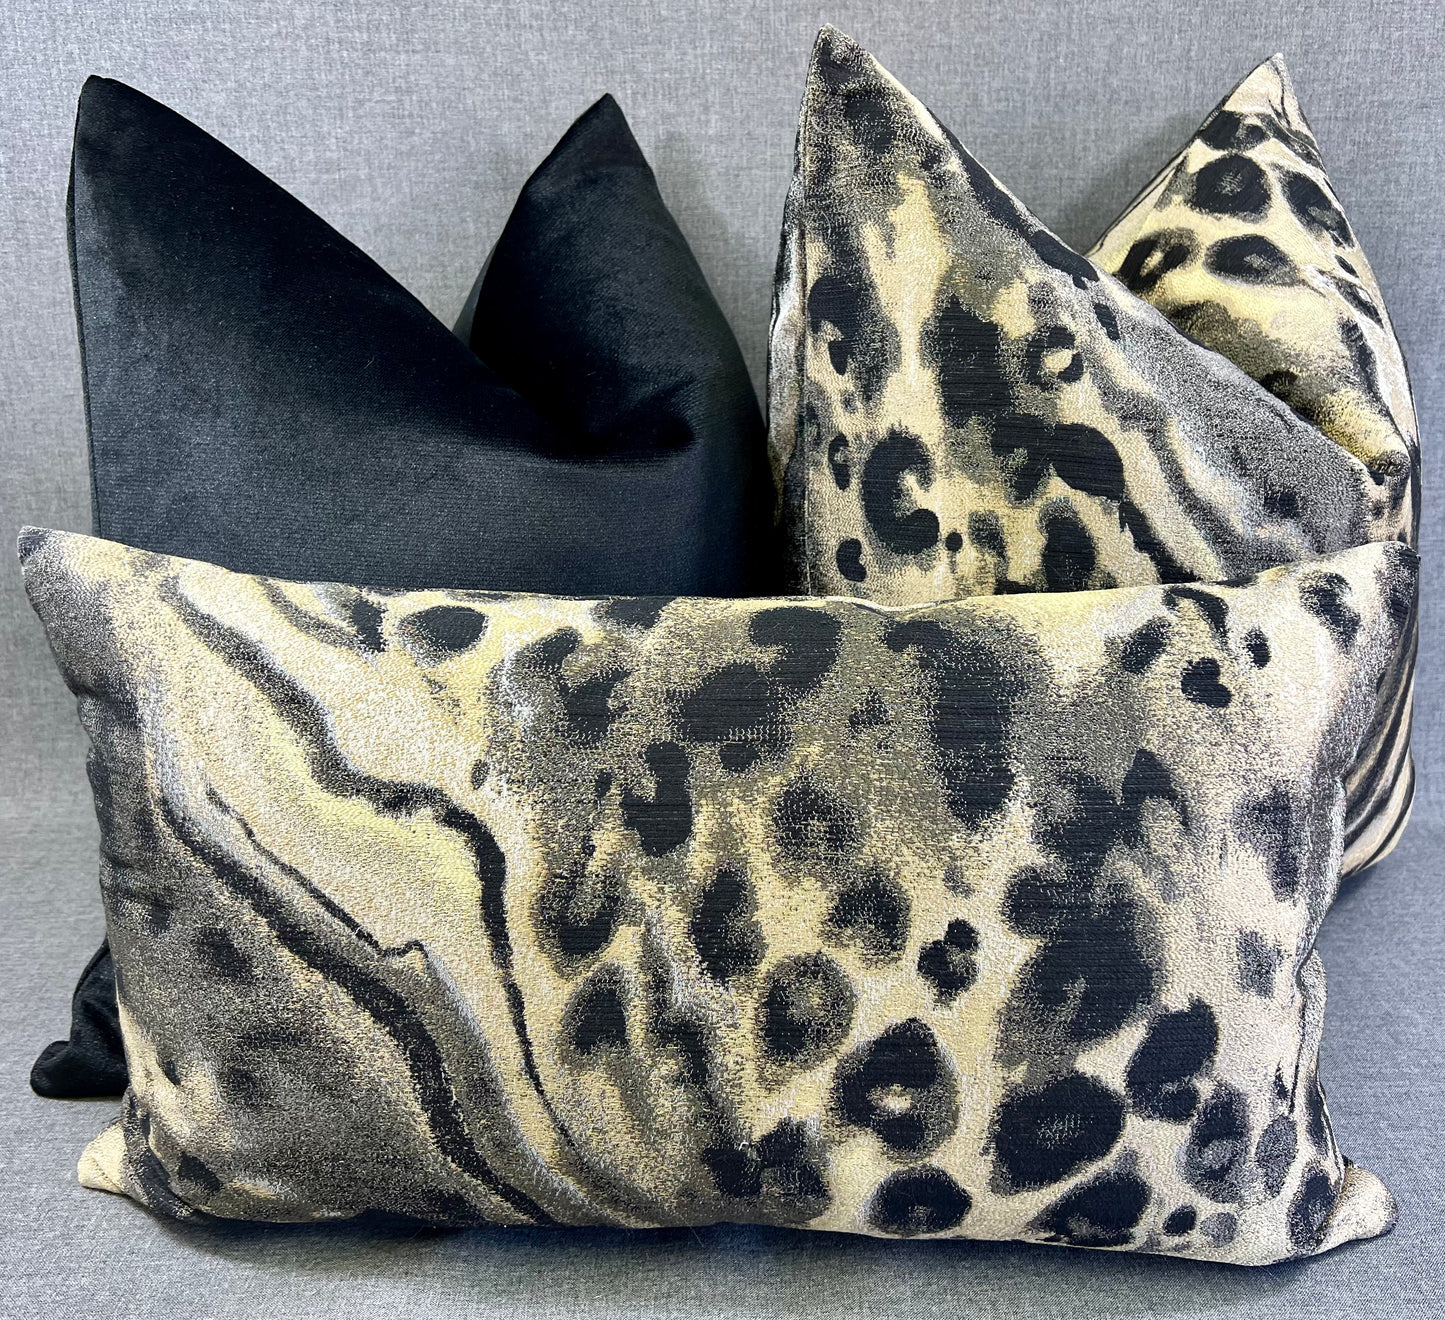 Luxury Lumbar Pillow - 24" x 14" - Ellia's Eye Lumbar-Golds & Black in an abstract animal print design